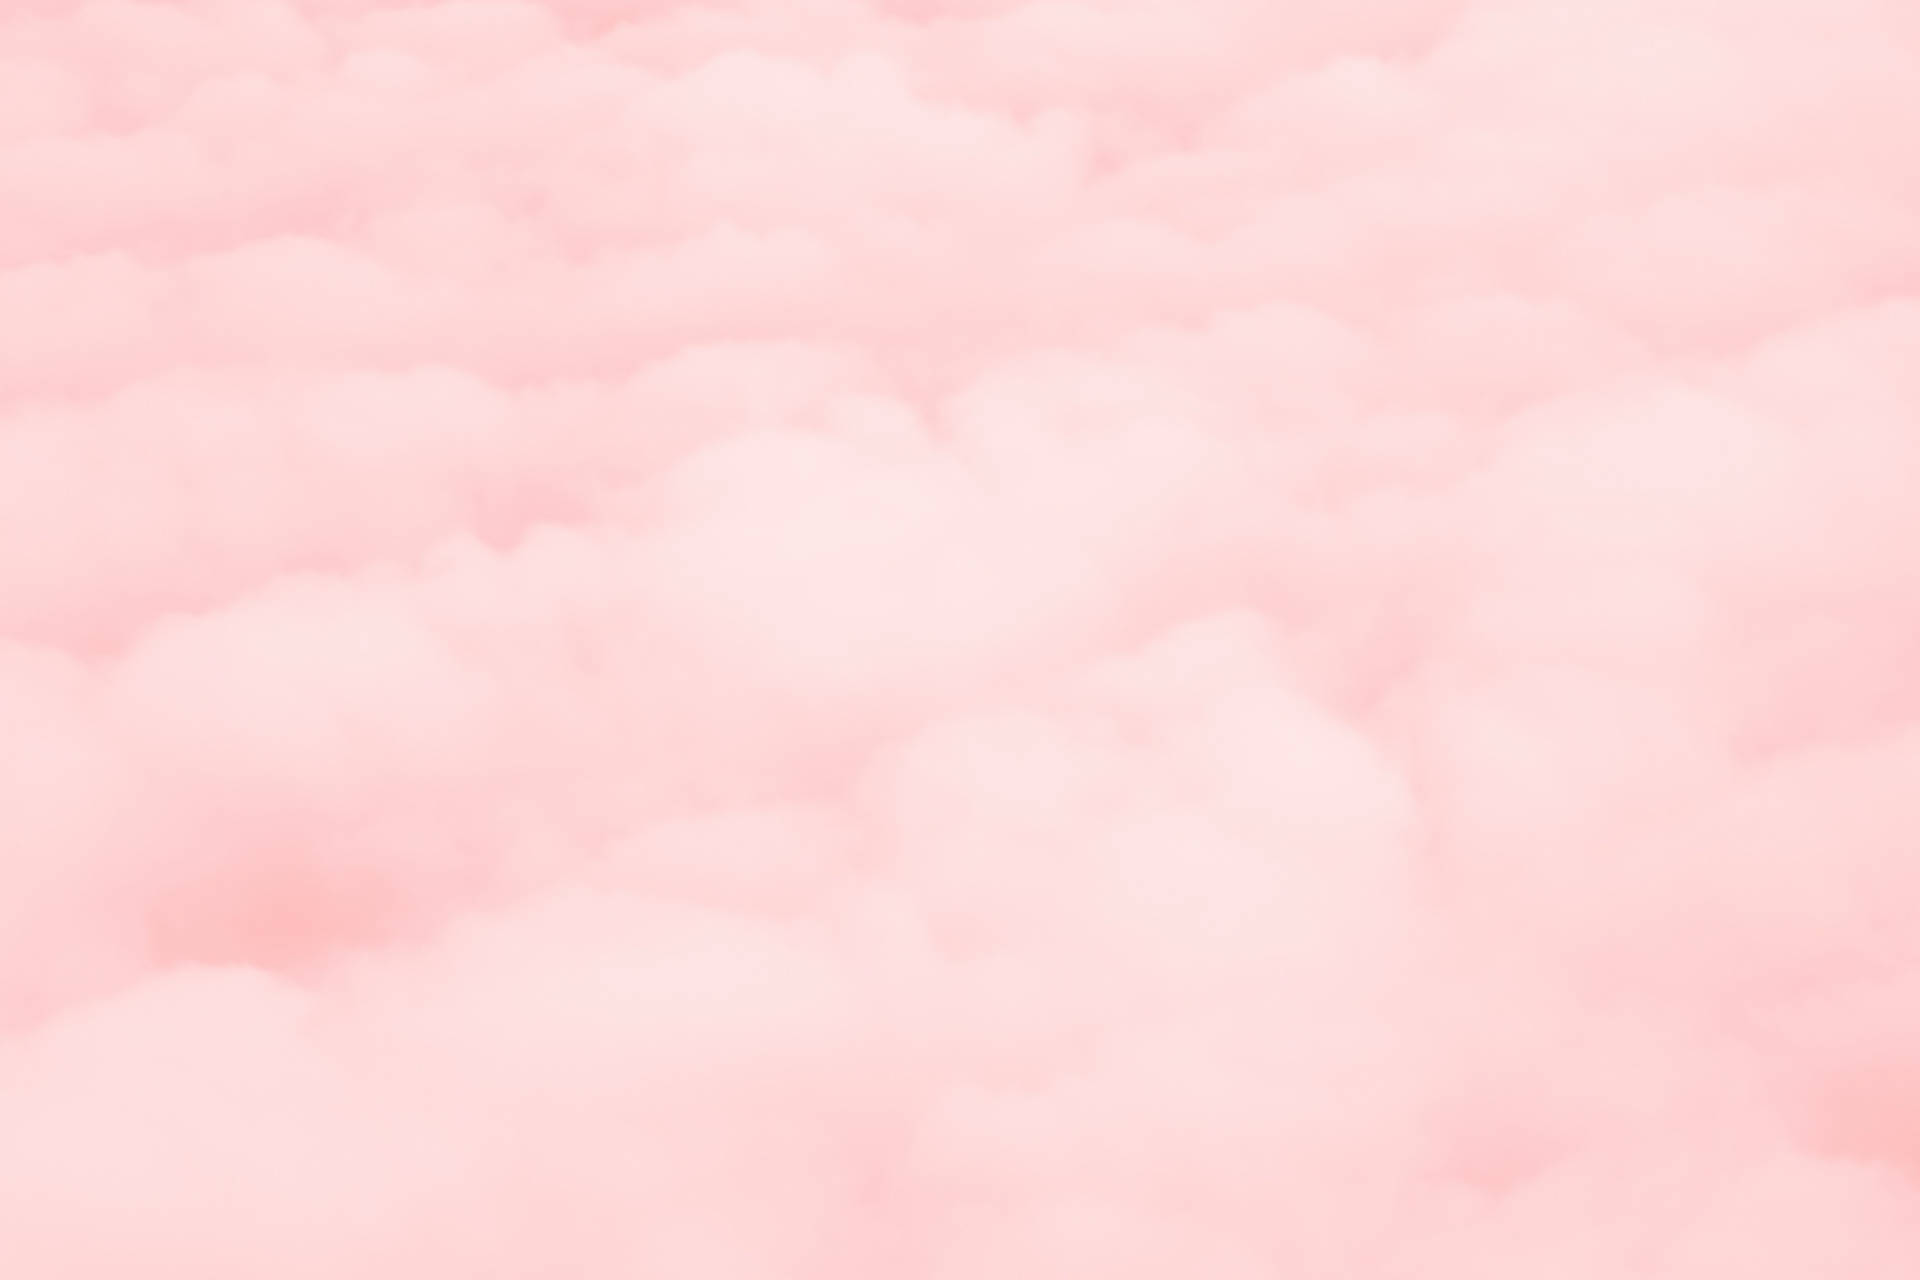 Enchanting Light Pink Cloud Aesthetic Background